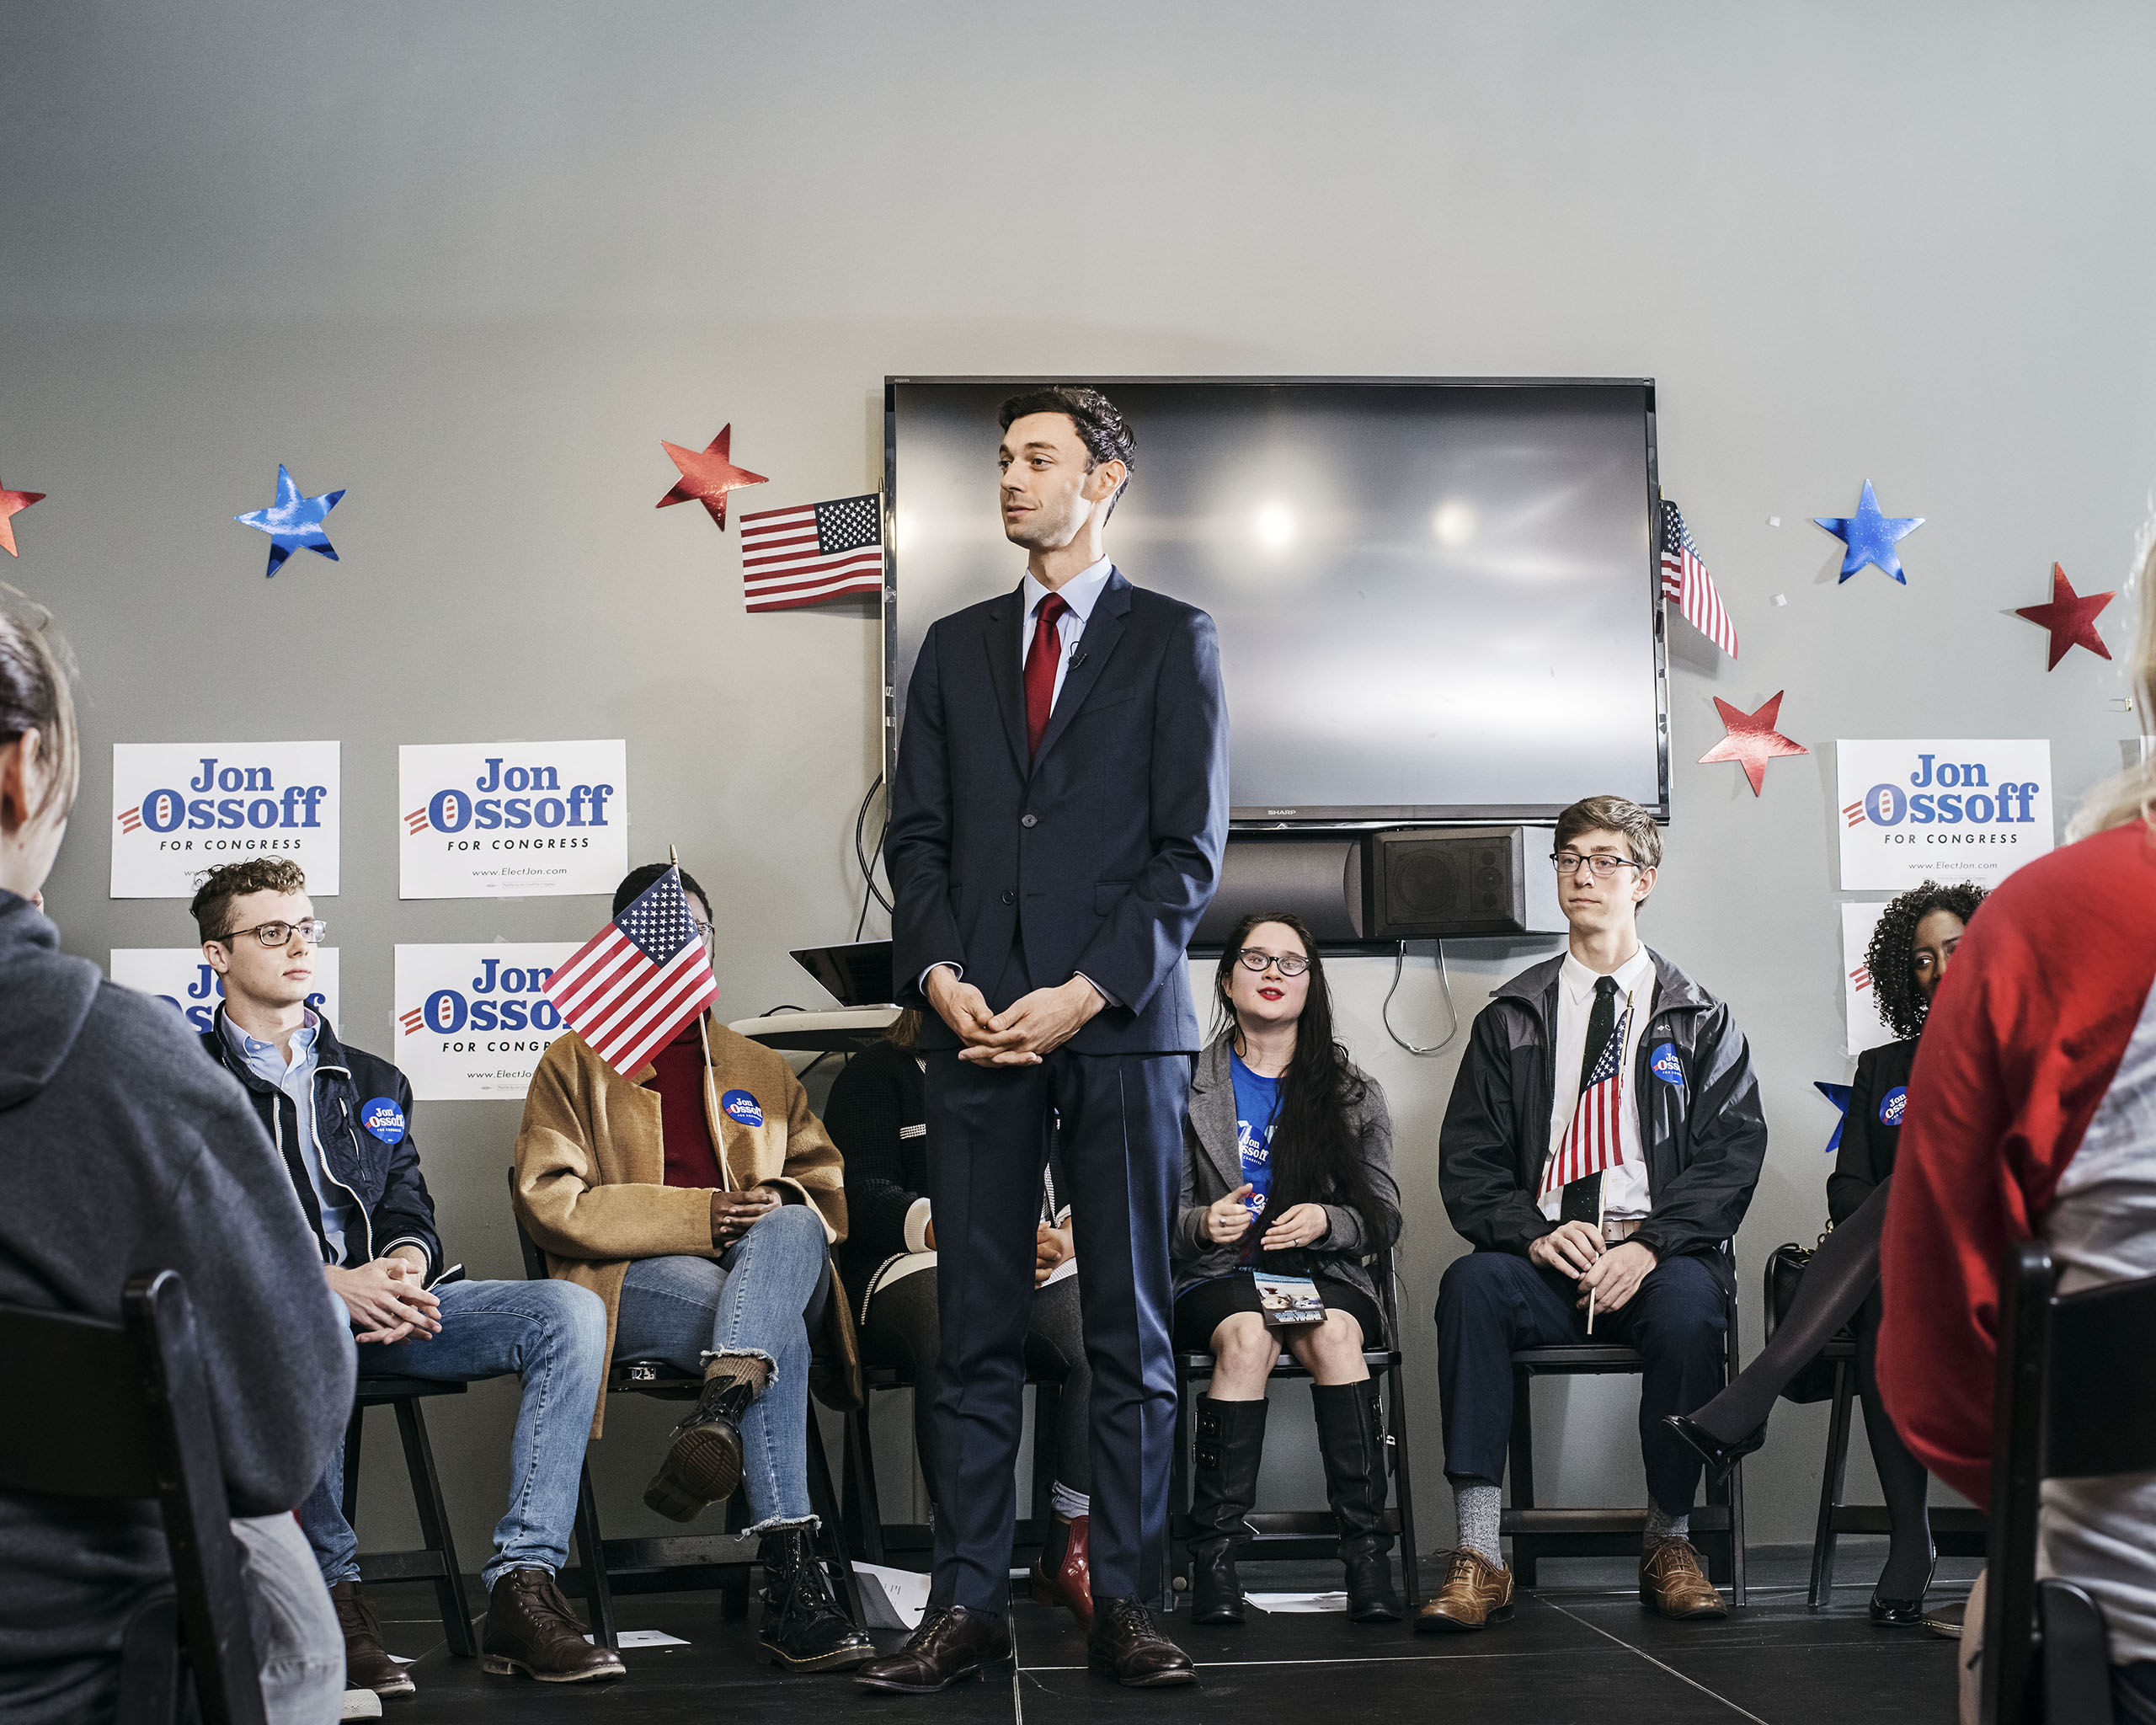 Jon-Ossoff-young-generation-Democratic-candidates